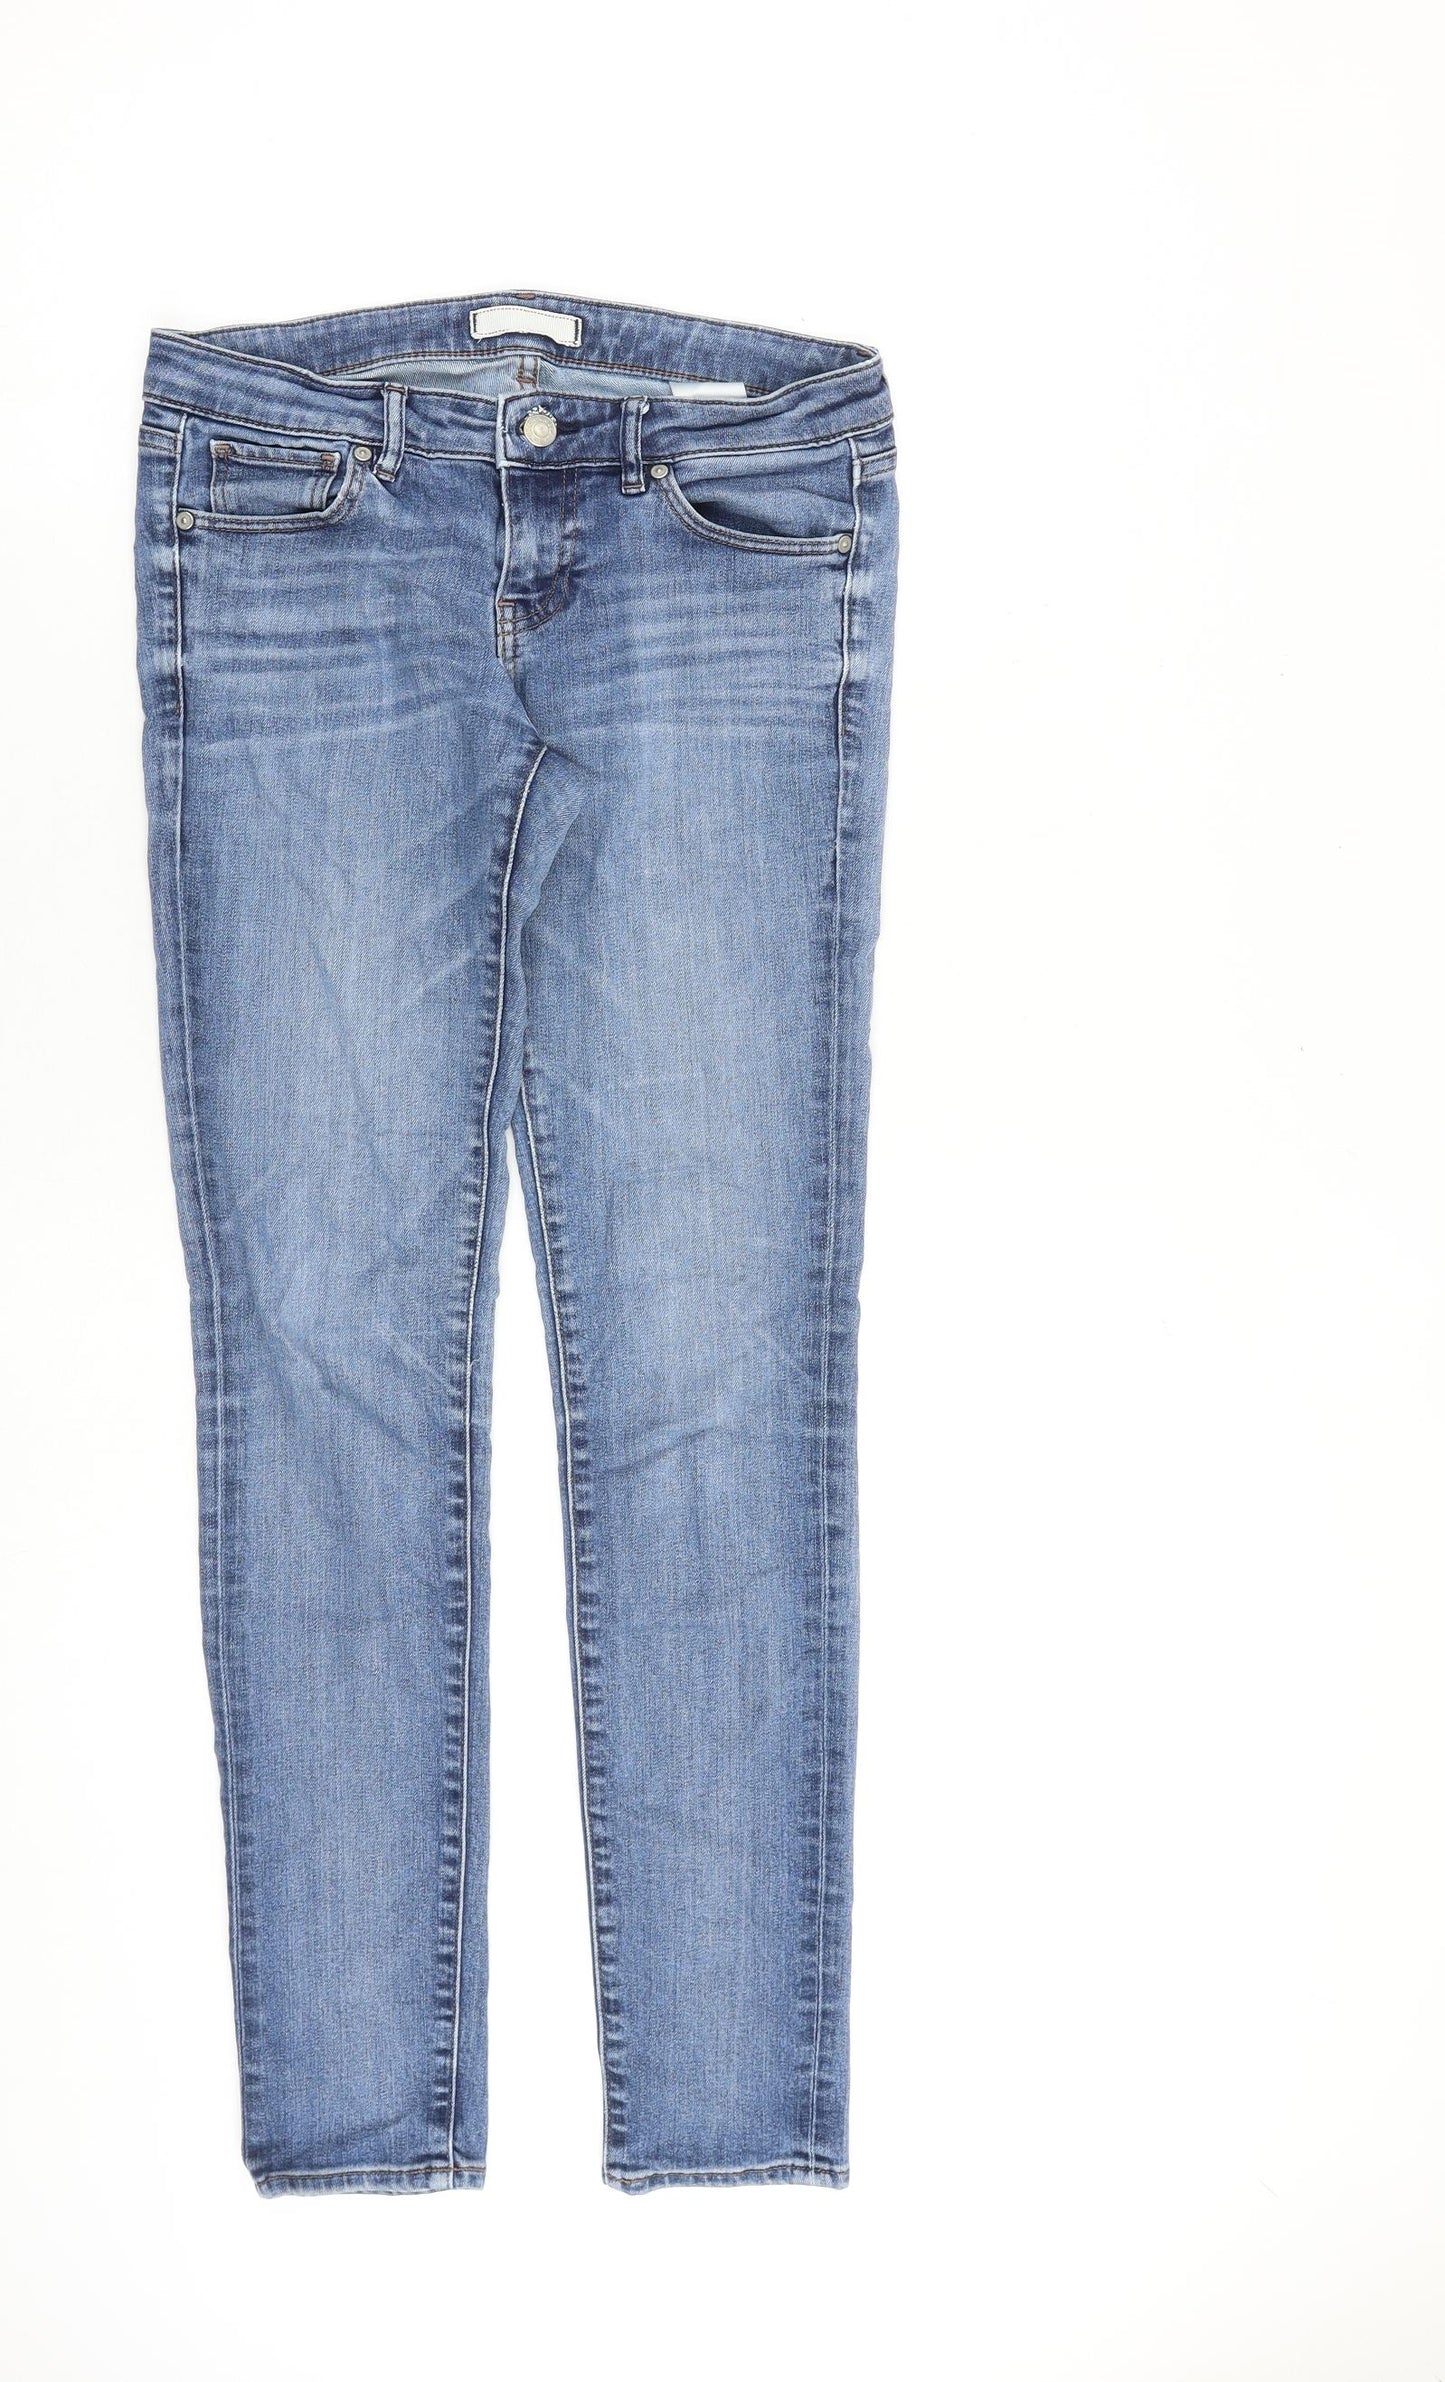 Uniqlo Womens Blue Cotton Skinny Jeans Size 28 in L30 in Slim Zip